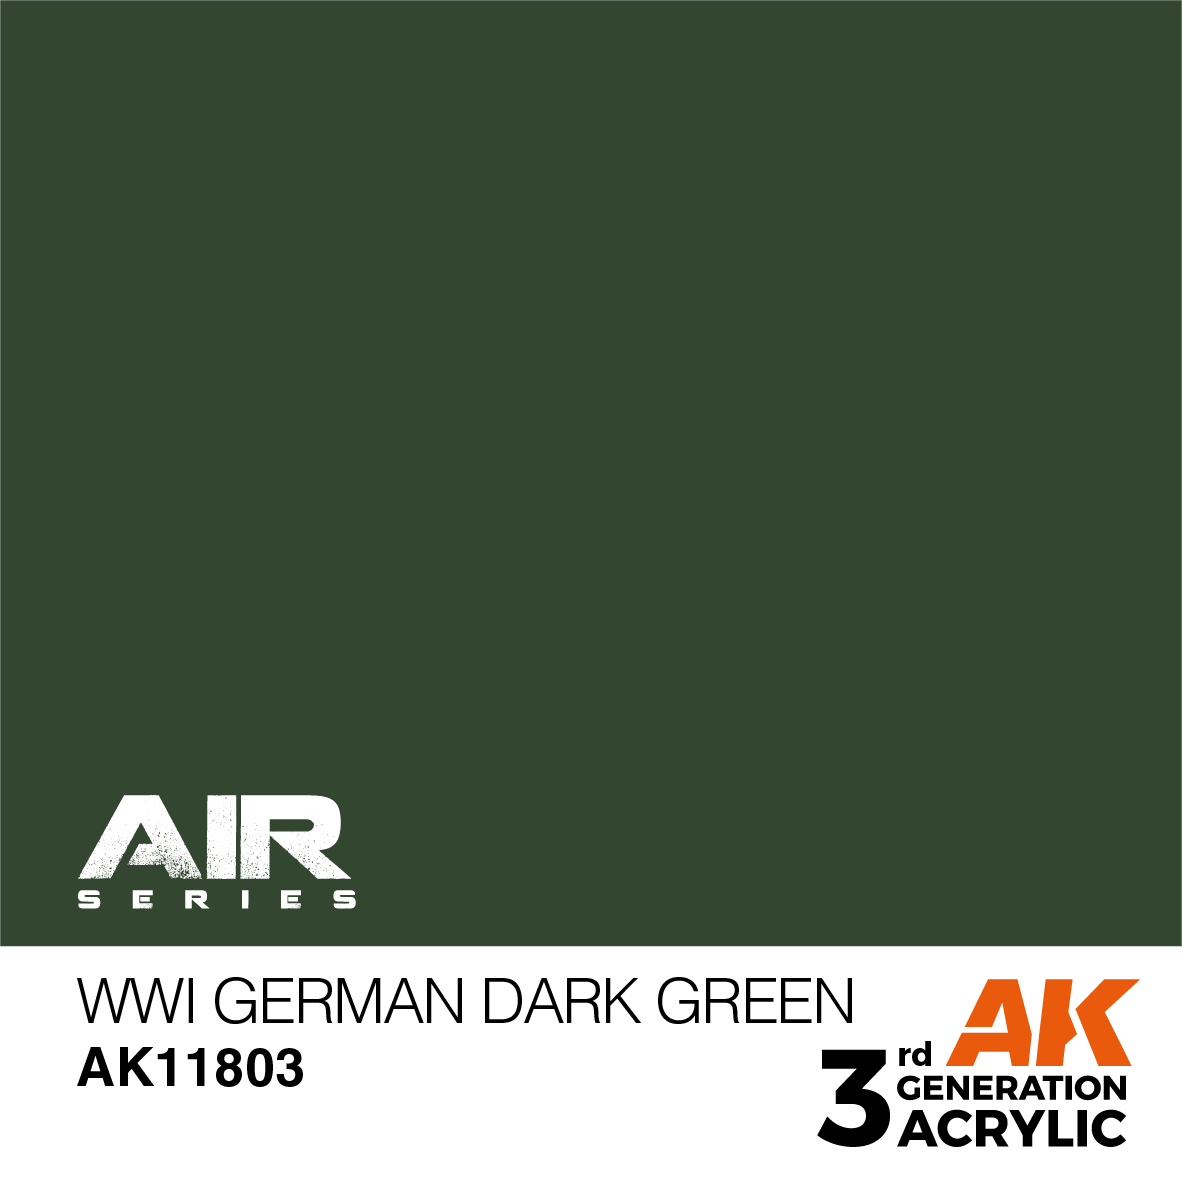 WWI German Dark Green – AIR